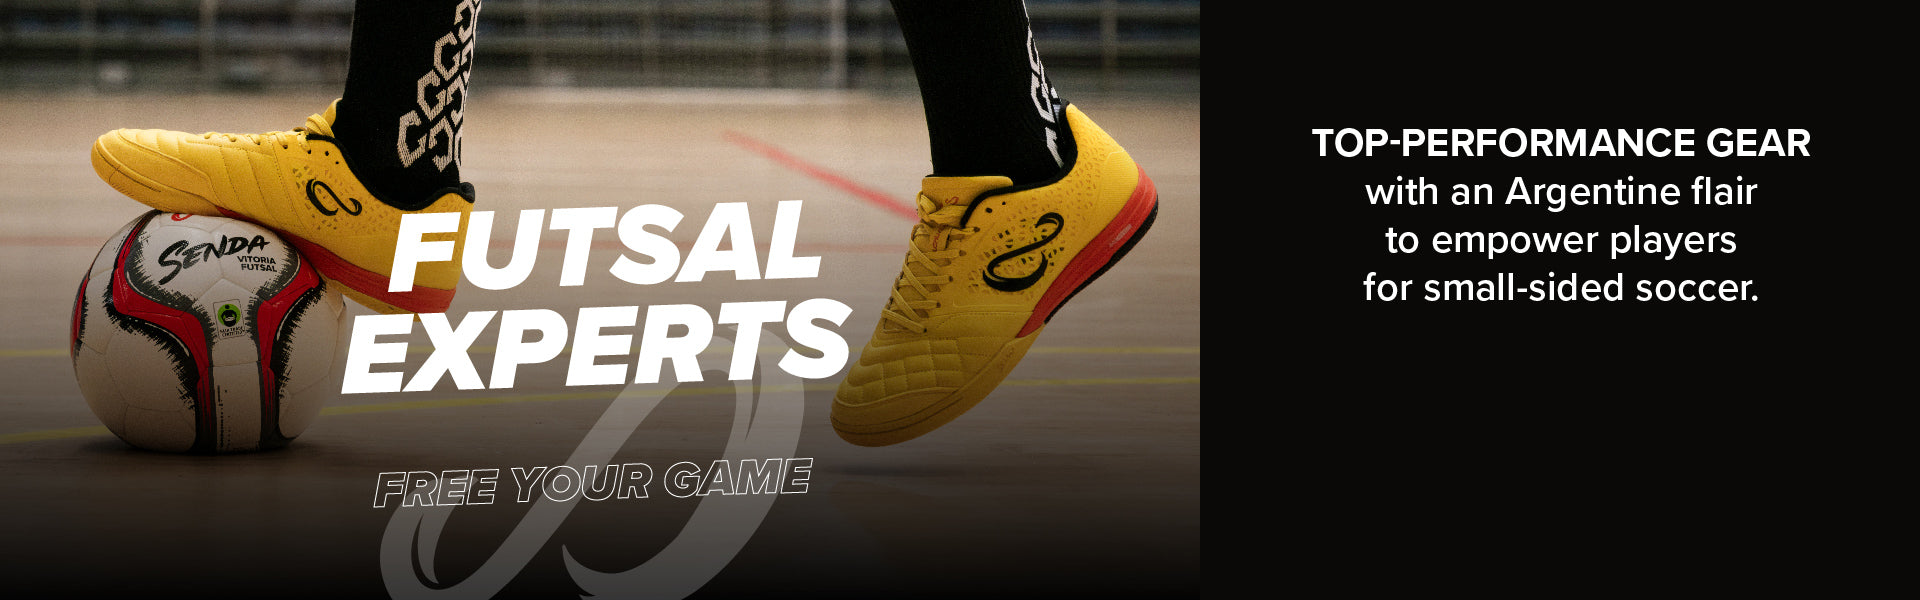 Futsal Experts - Free Your Game | Senda Athletics